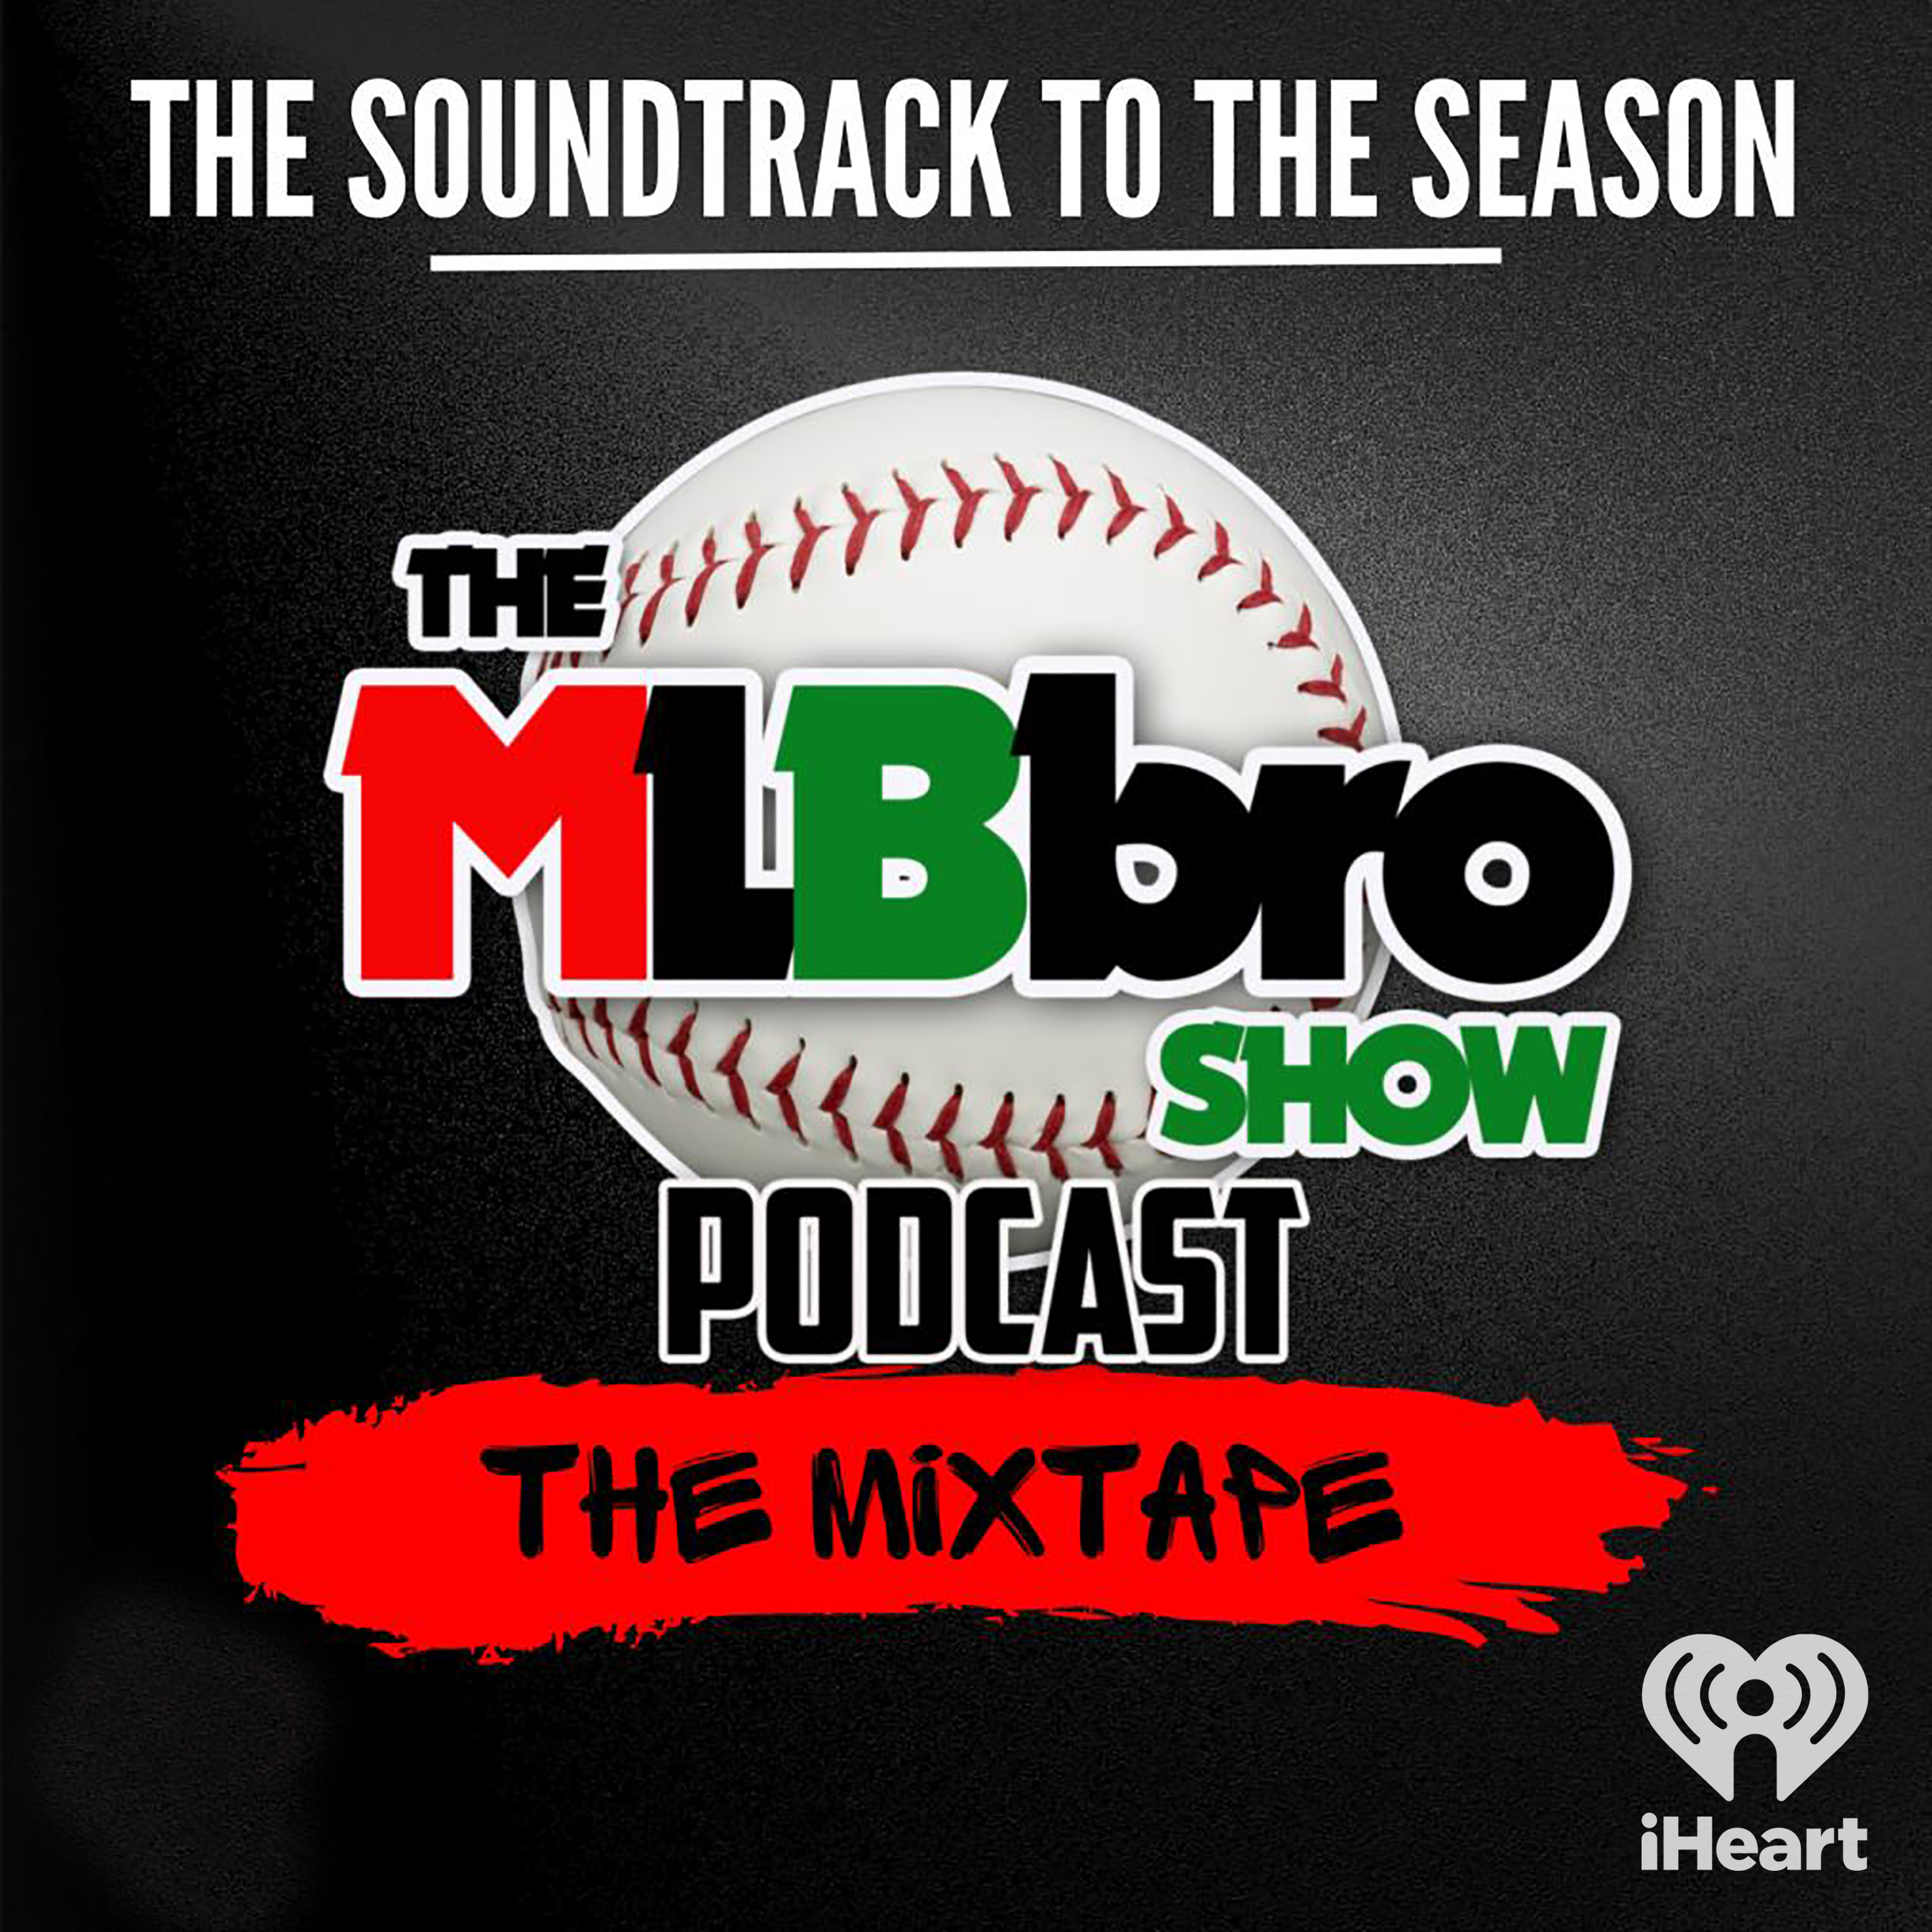 MLBbro Show Podcast The Mixtape Vol 3 Episode 4